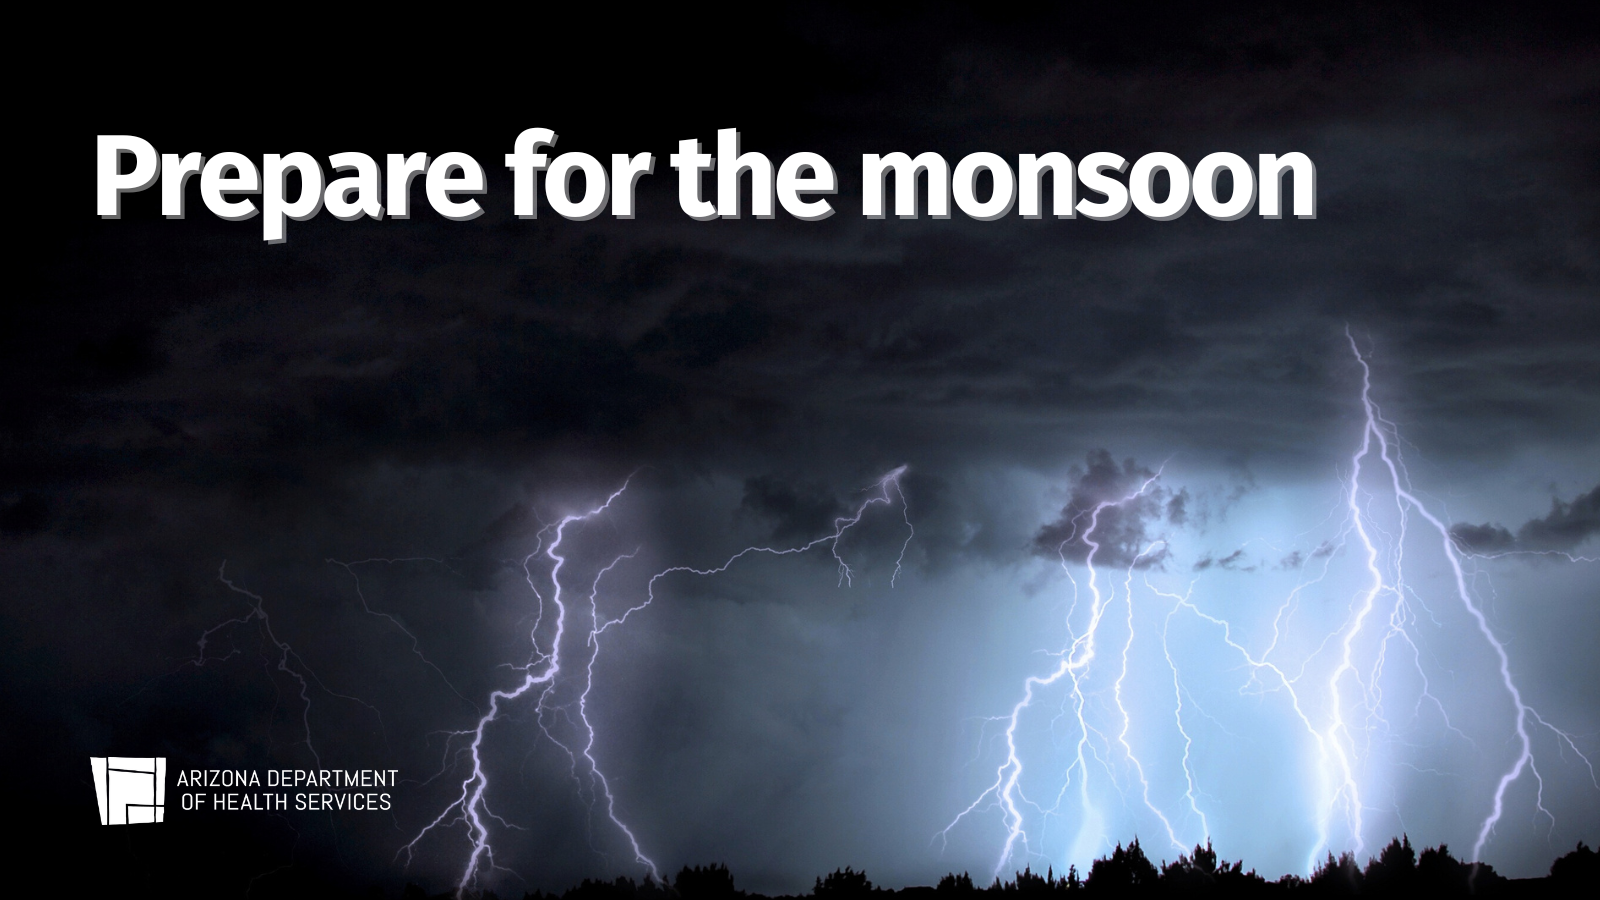 Stay weather aware and prepare for Arizona’s monsoon season AZ Dept